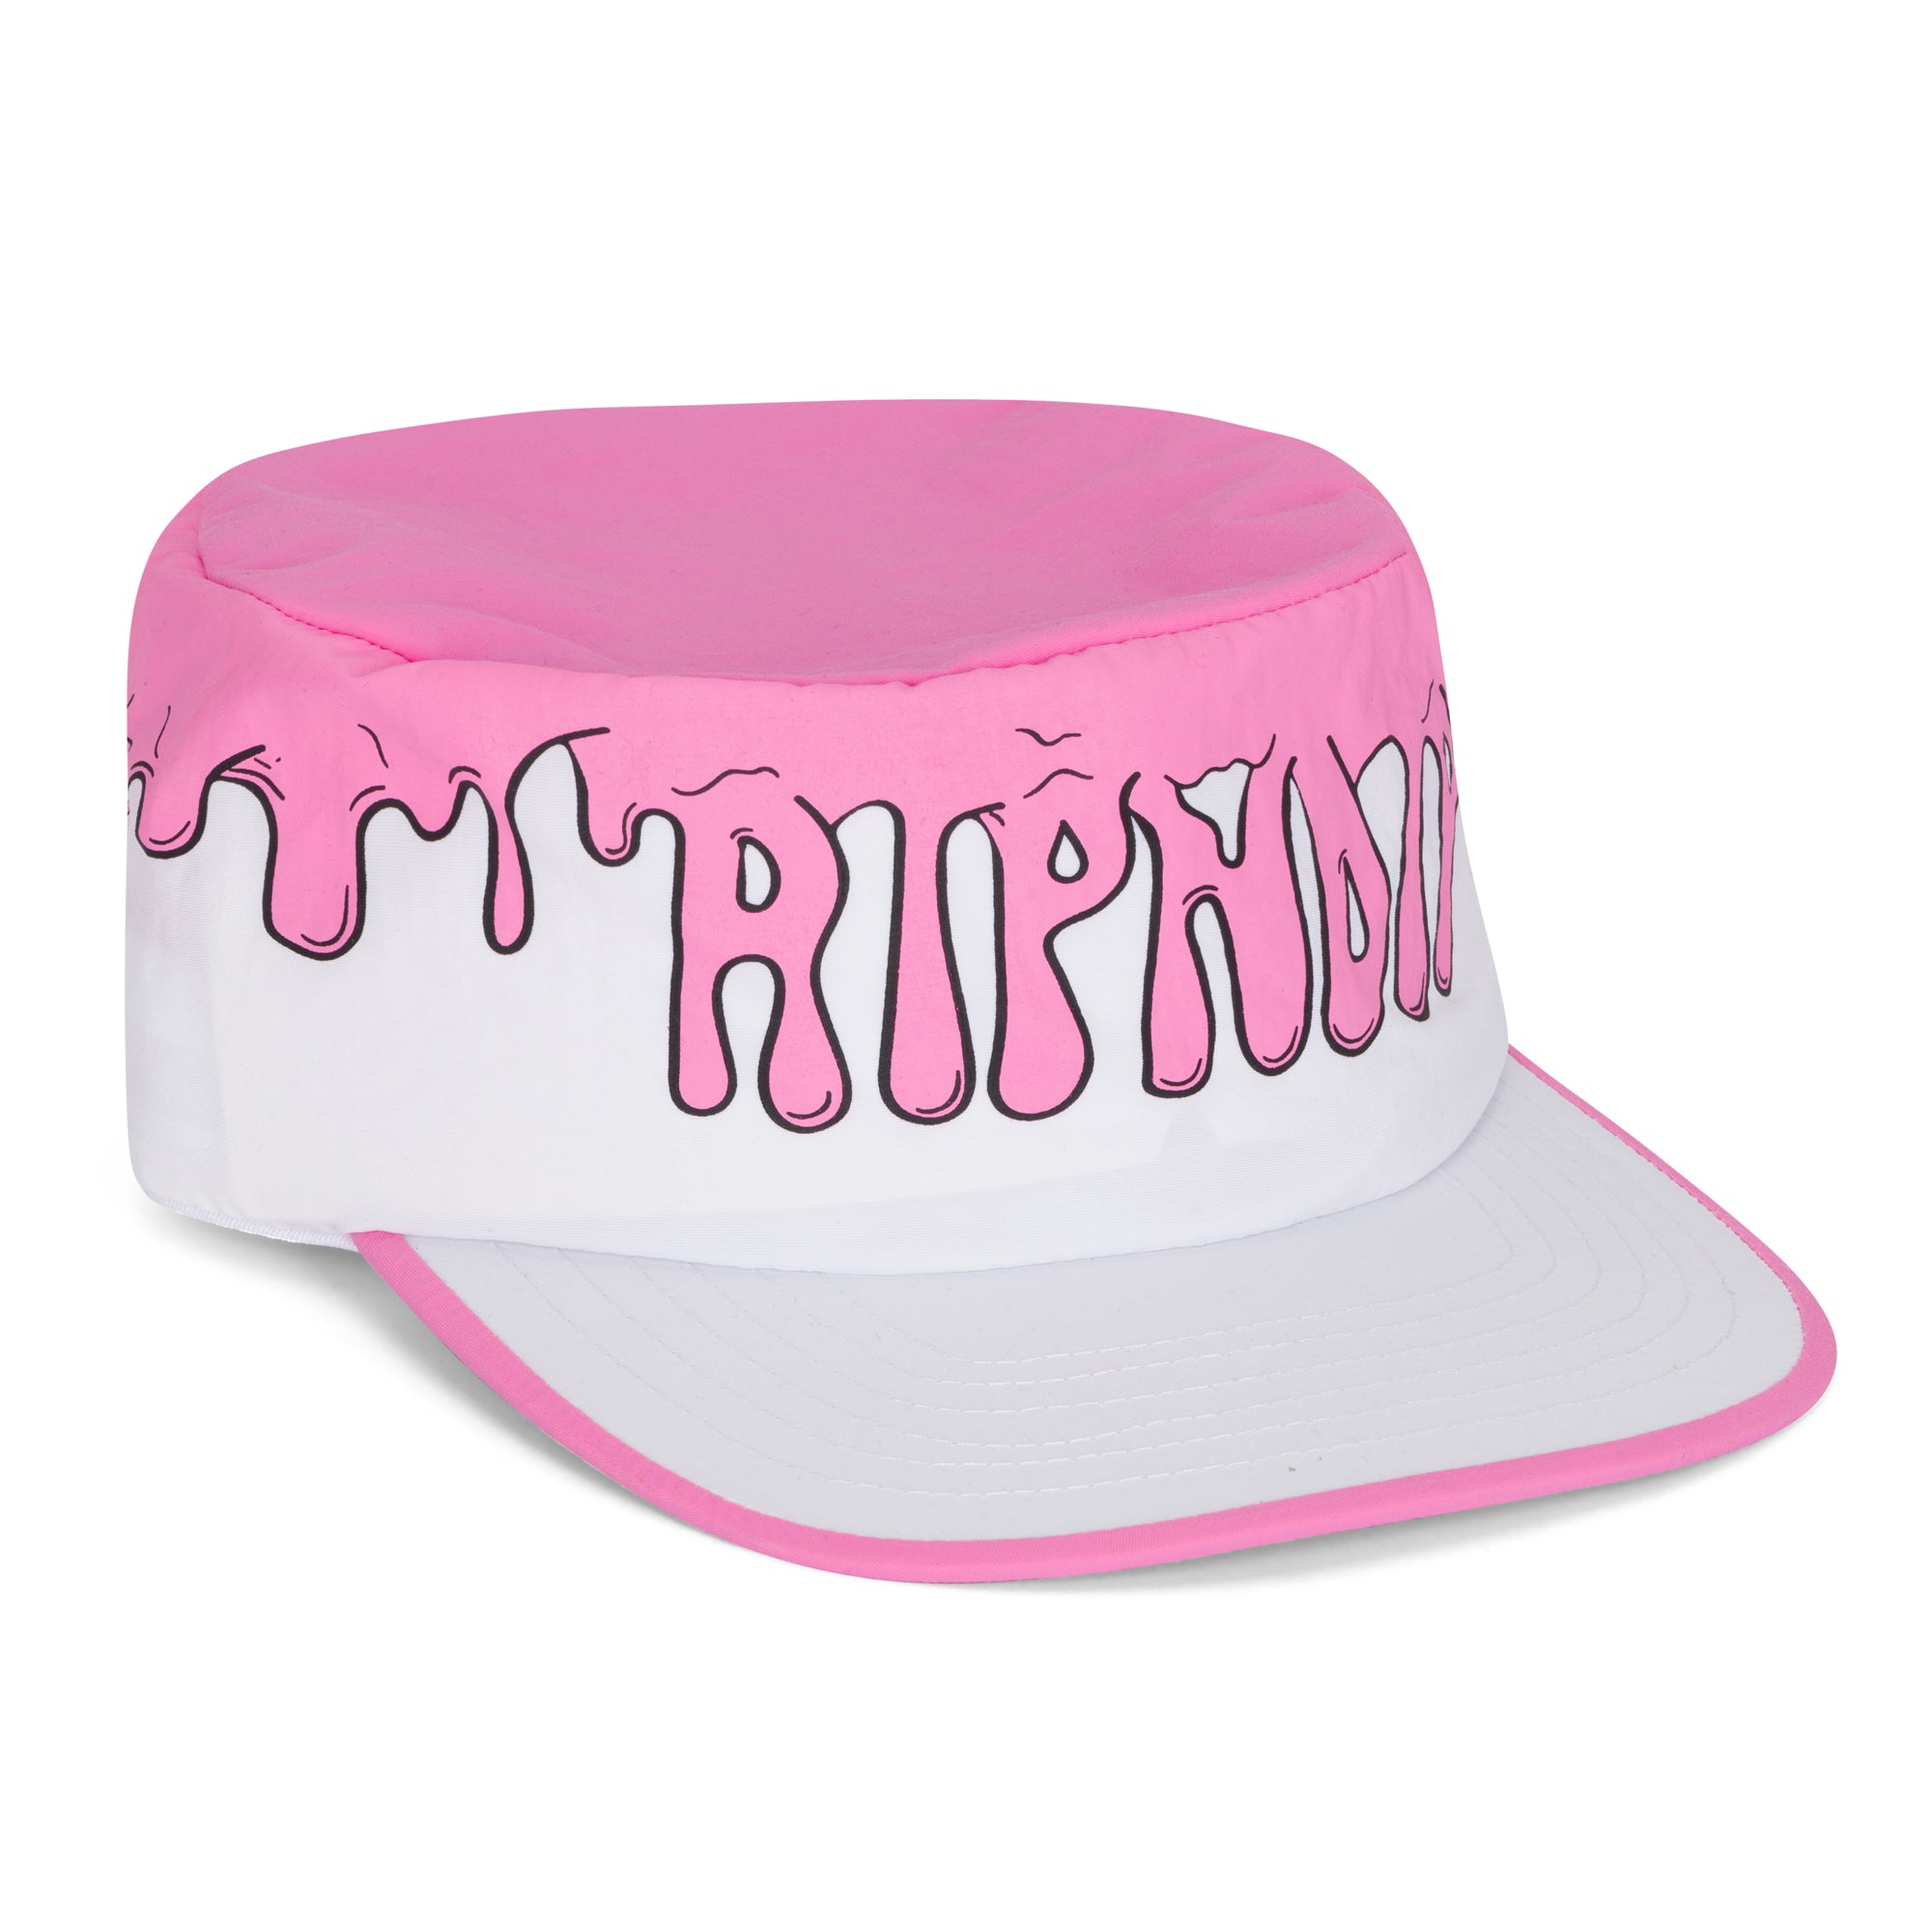 RIPNDIP Drizzle Painters Hat (Pink / White)